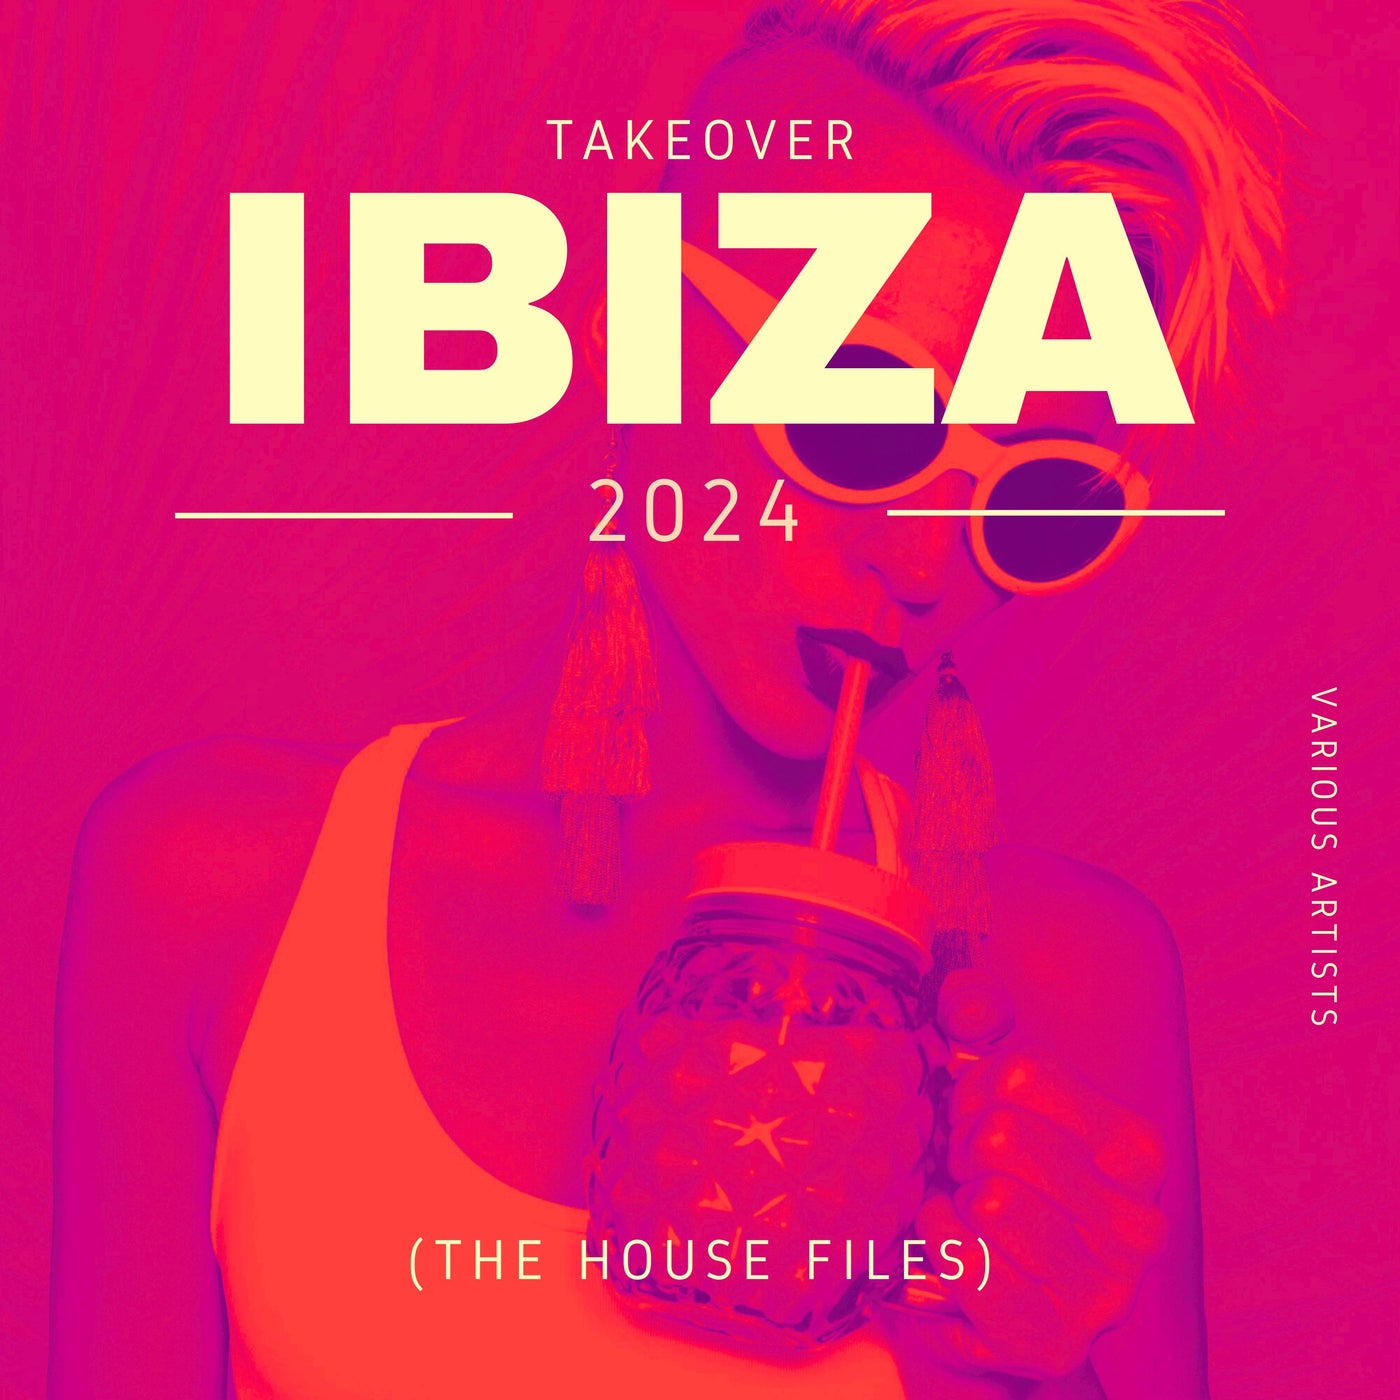 Takeover IBIZA 2024 (The House Files)